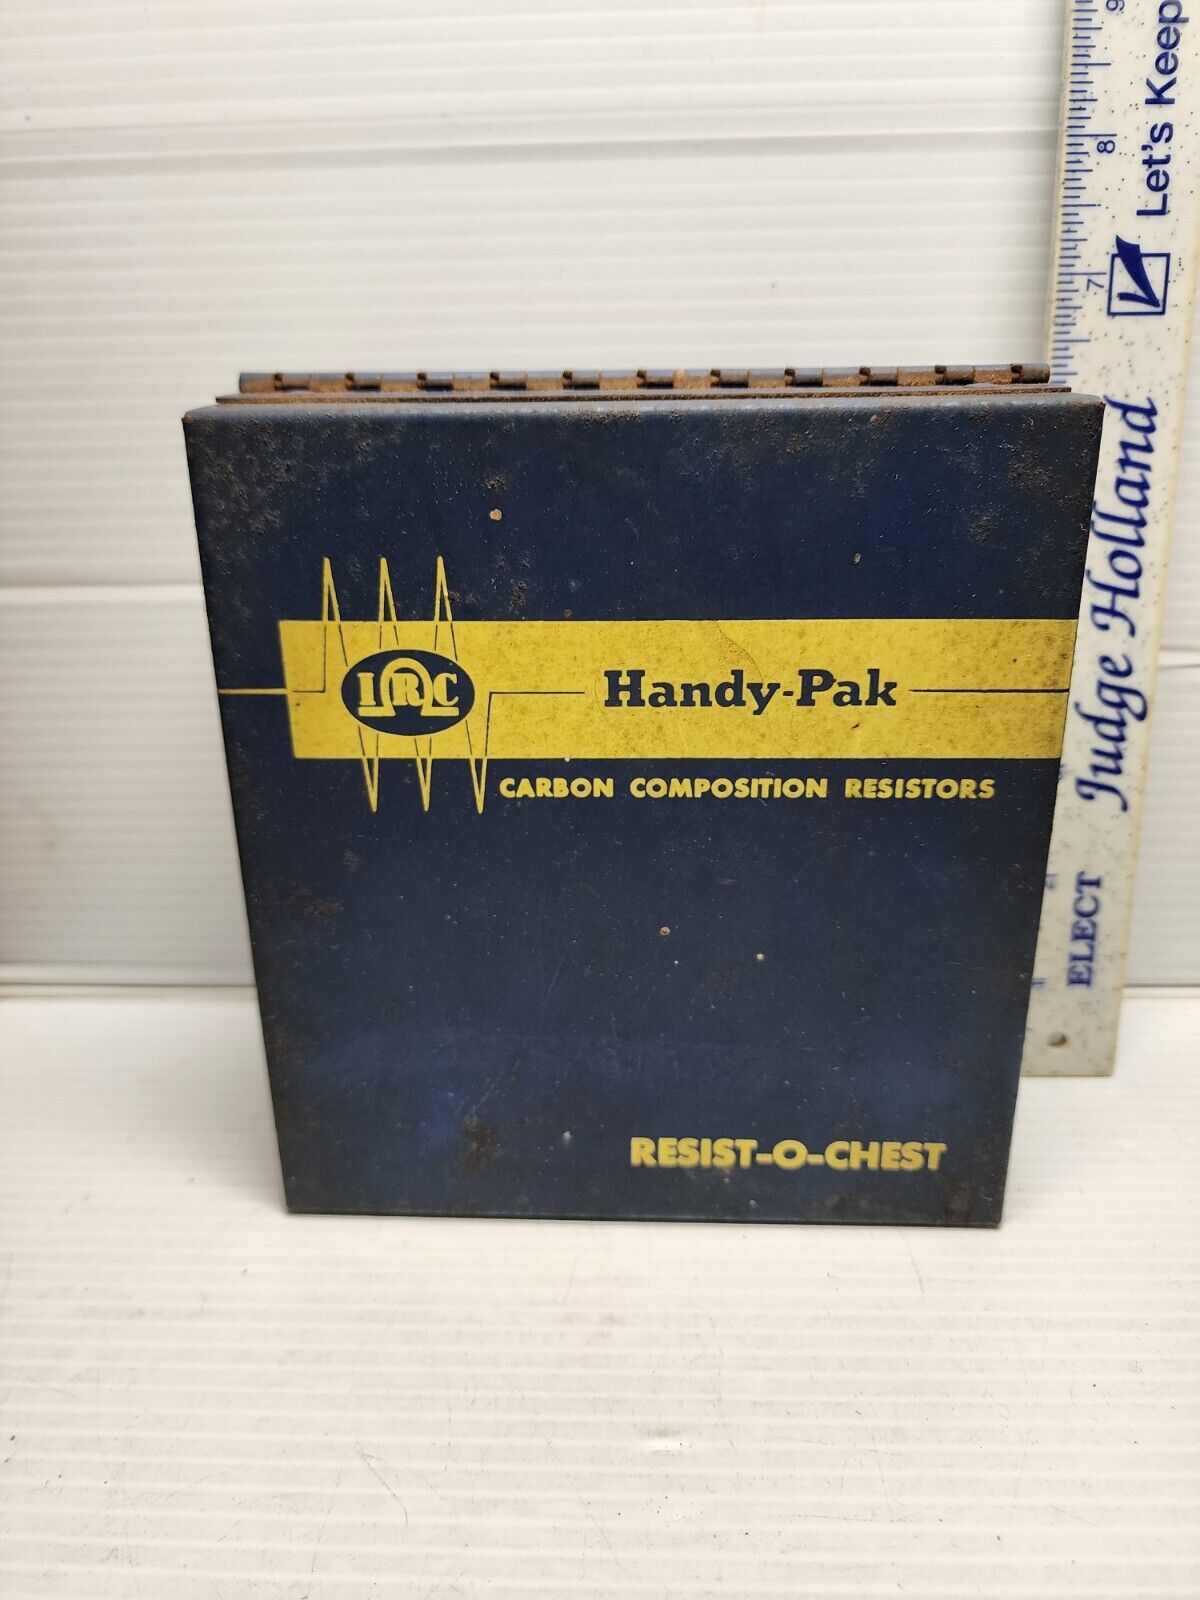 Vintage Resist O Chest Carbon Comp Resistor Cabinet Box Metal Shop Display 